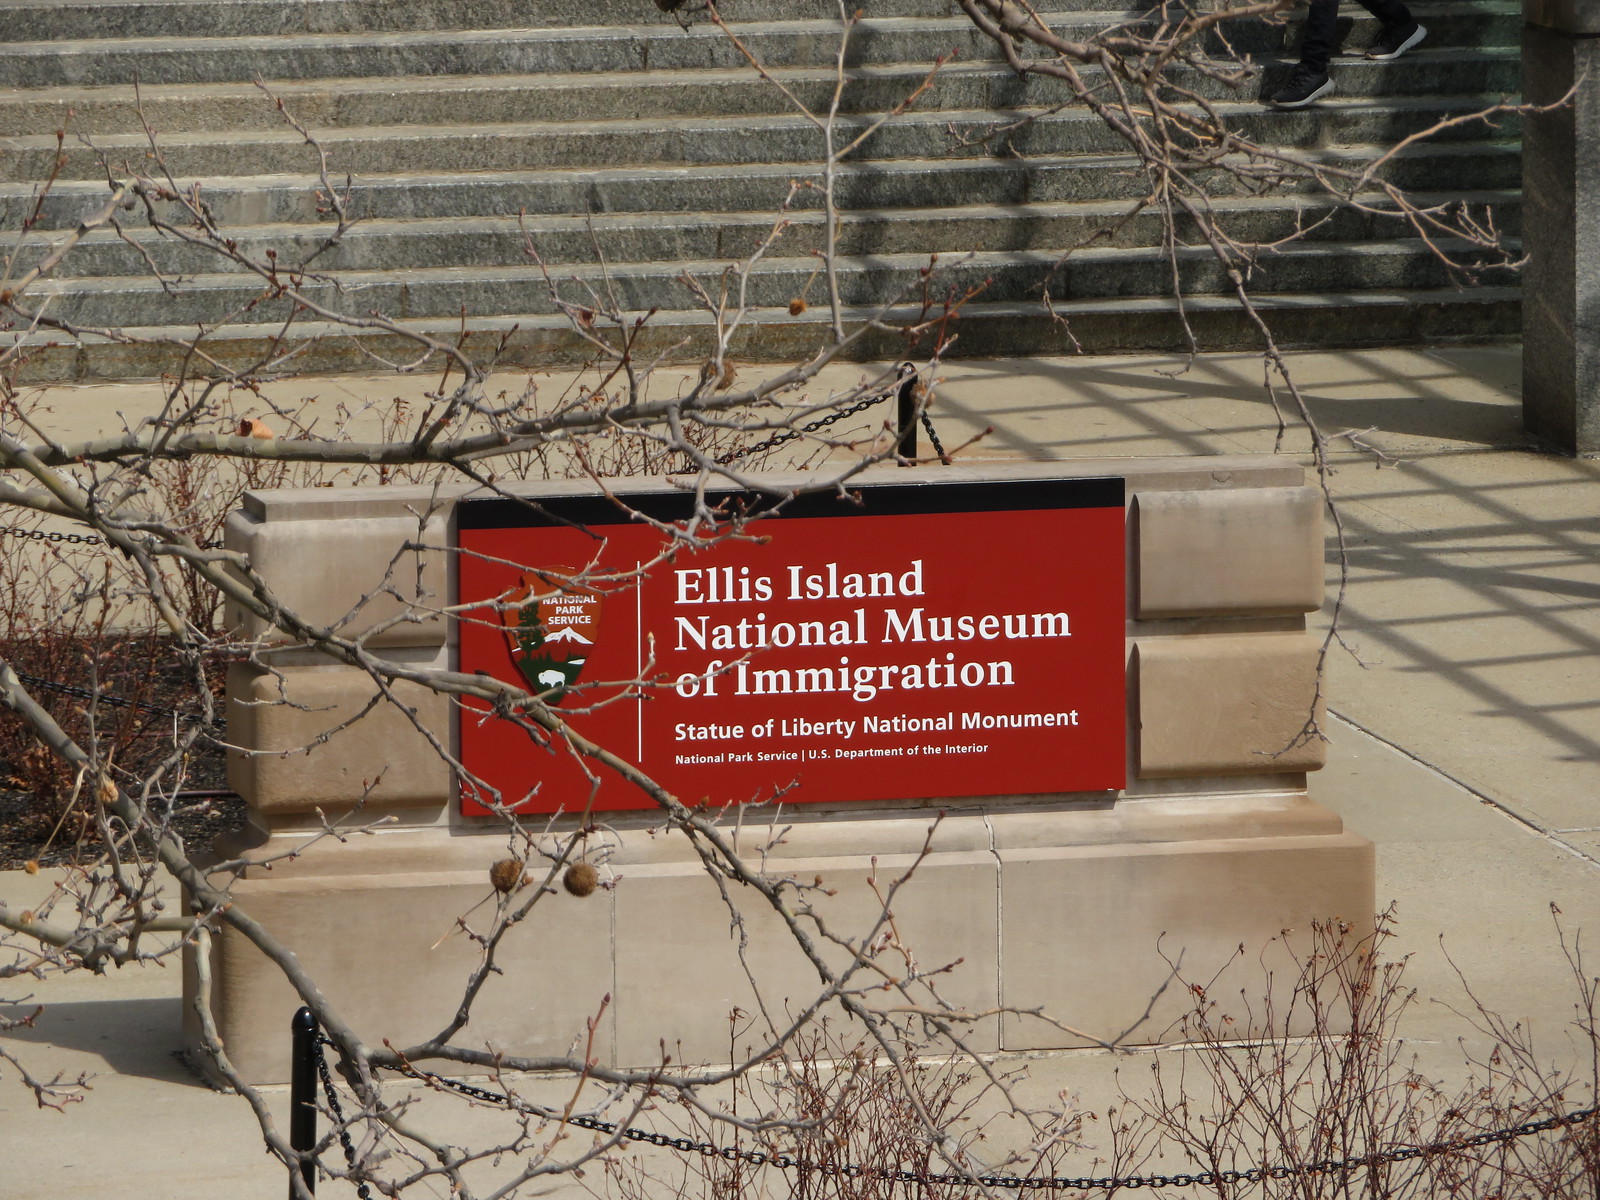 Ellis Island National Museum of Immigration, New York, New York